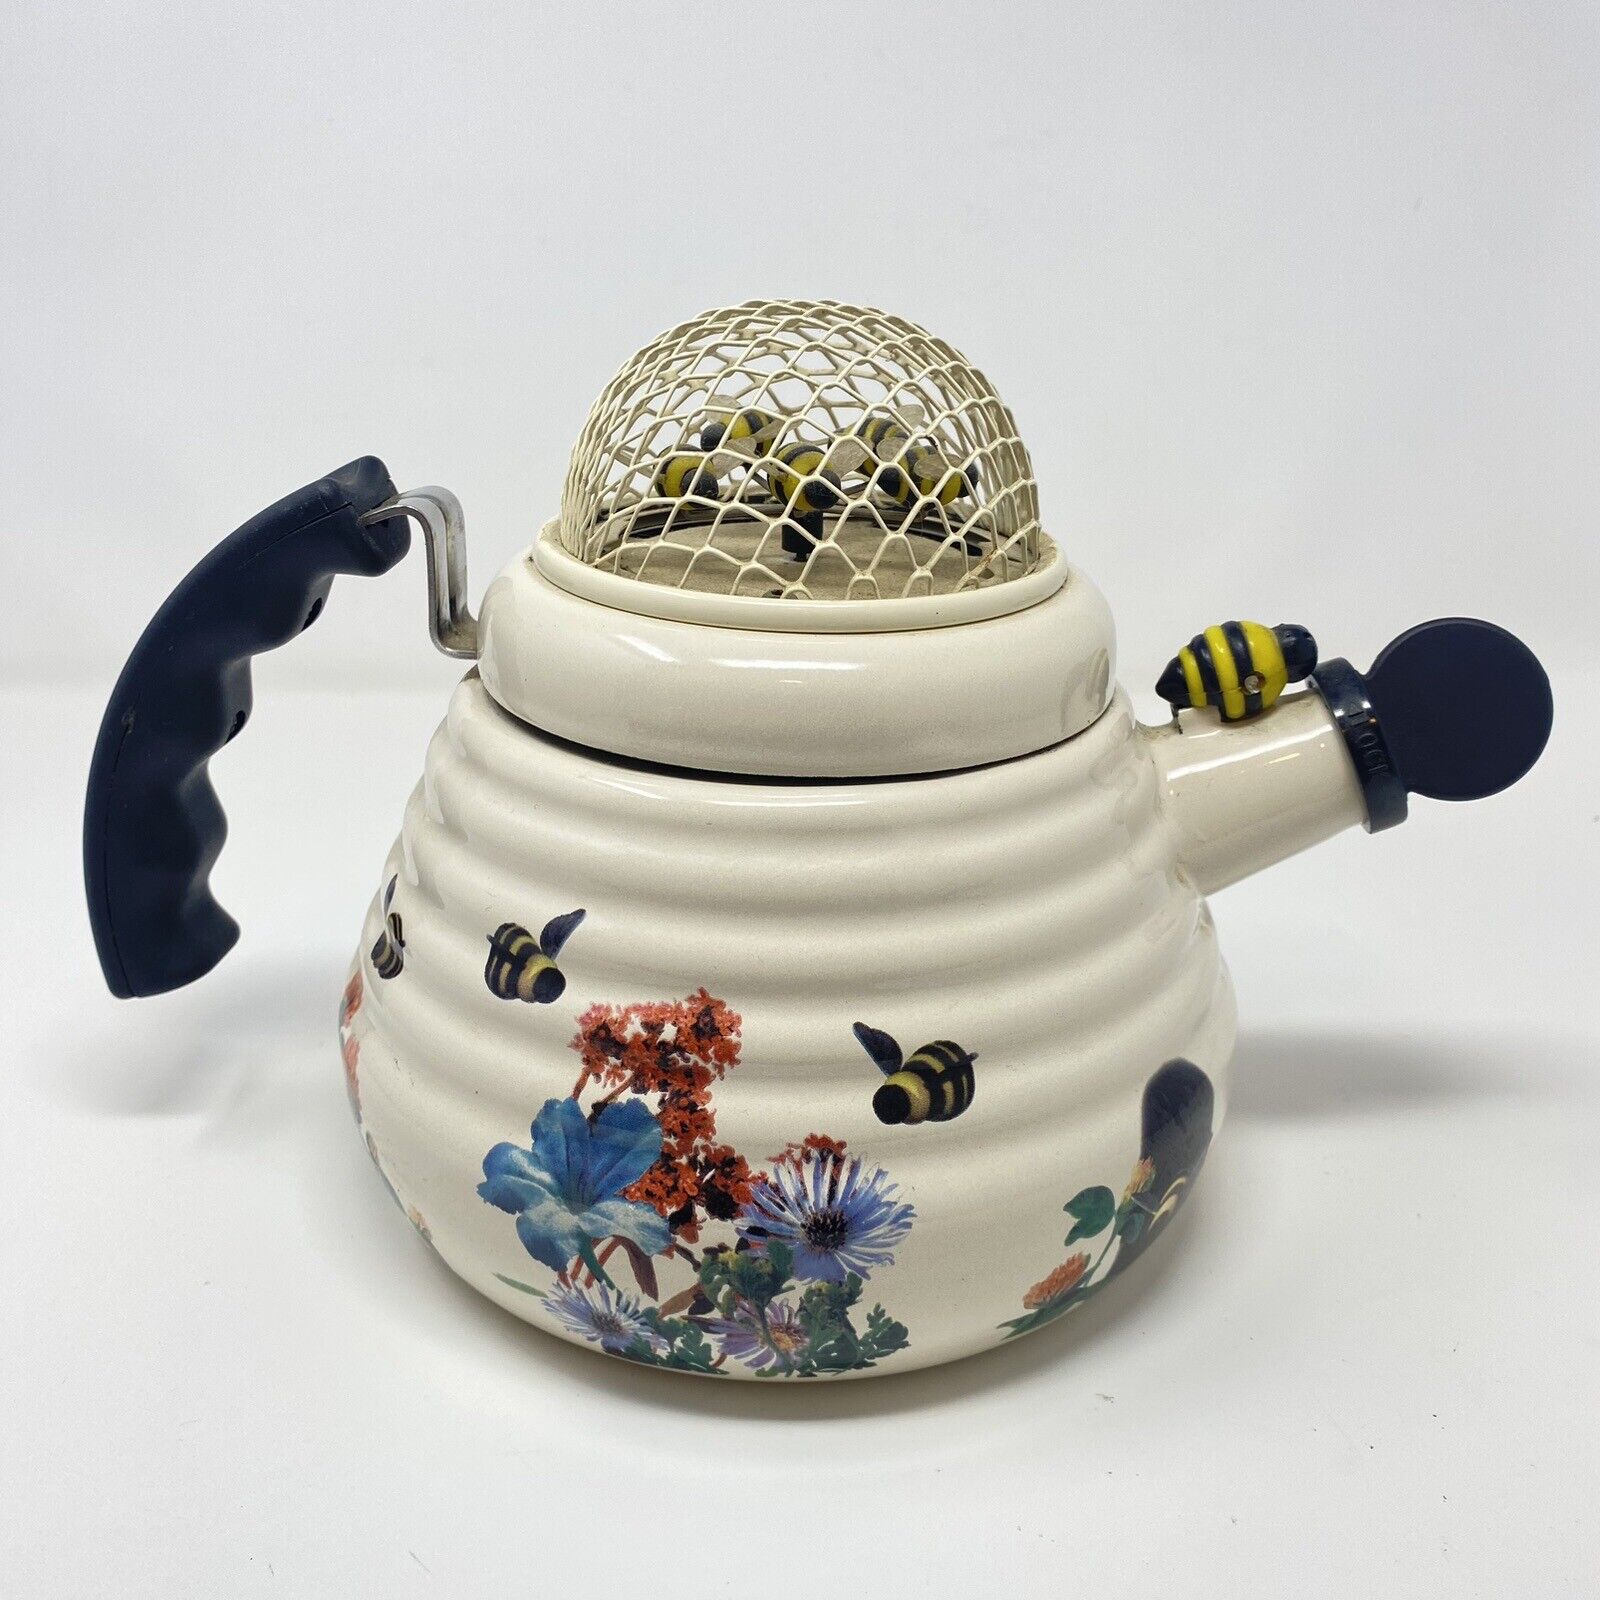 MM Kamenstein BUMBLE BEE tea kettle teapot RARE Metal Spin Spinning Bees - READ